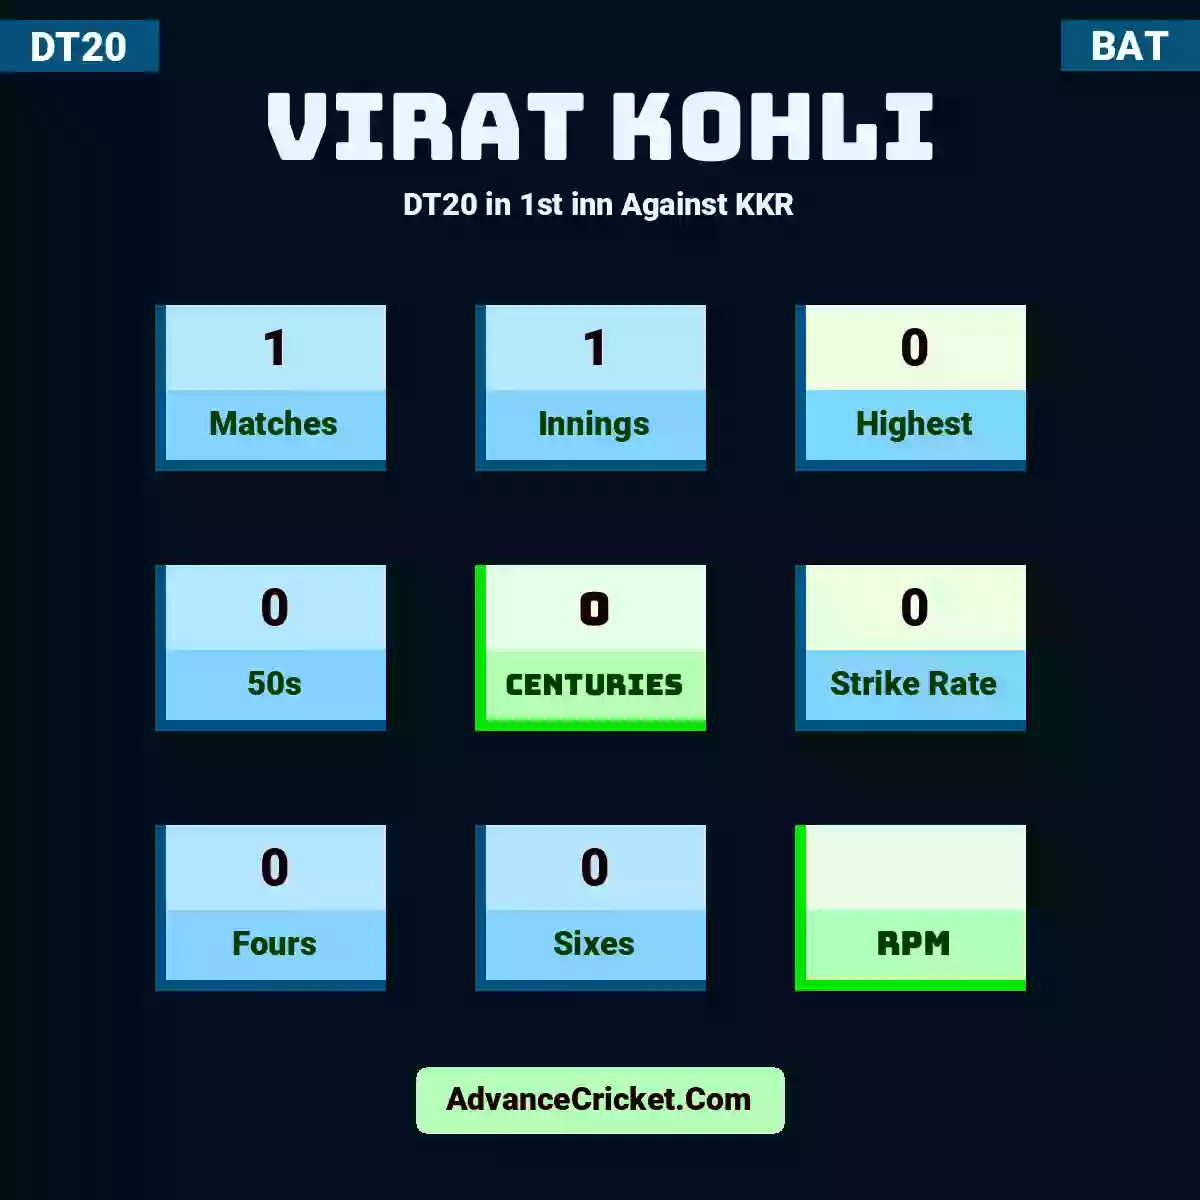 Virat Kohli DT20  in 1st inn Against KKR, Virat Kohli played 1 matches, scored 0 runs as highest, 0 half-centuries, and 0 centuries, with a strike rate of 0. V.Kohli hit 0 fours and 0 sixes.